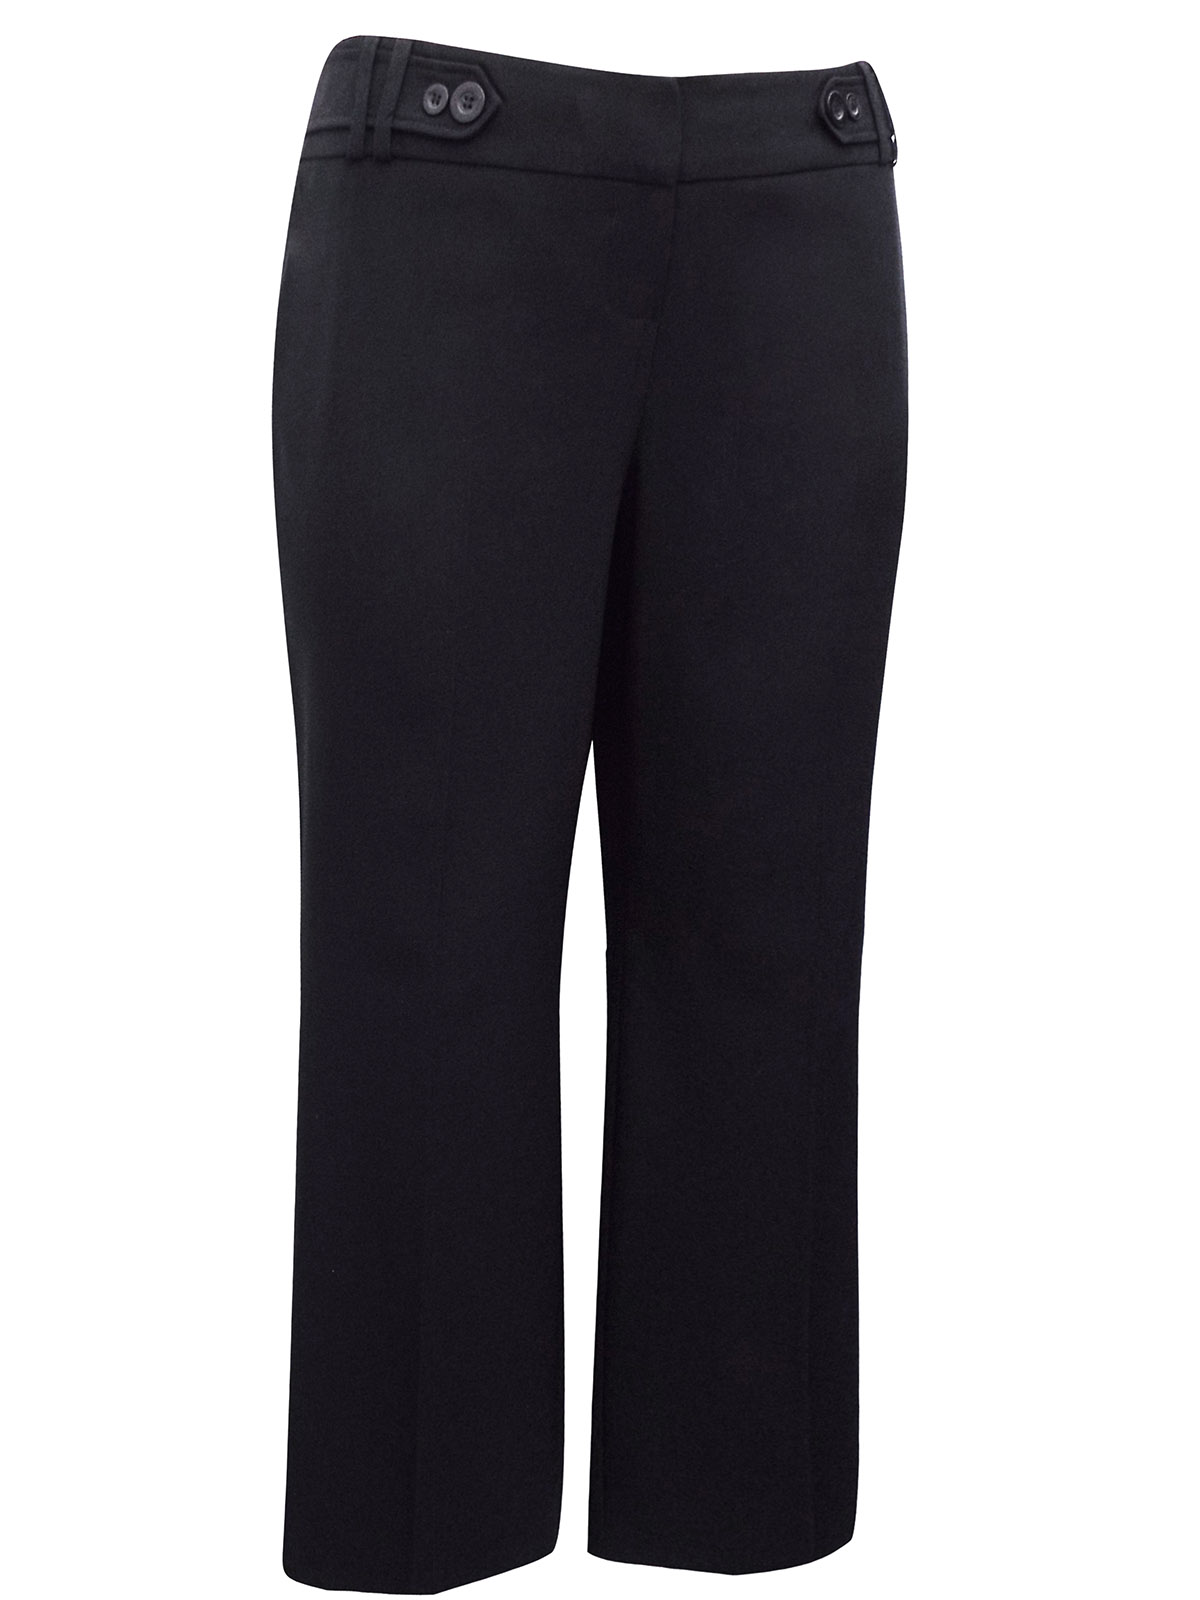 3VANS BLACK Straight Leg Button Detail Trousers - Plus Size 14 to 30